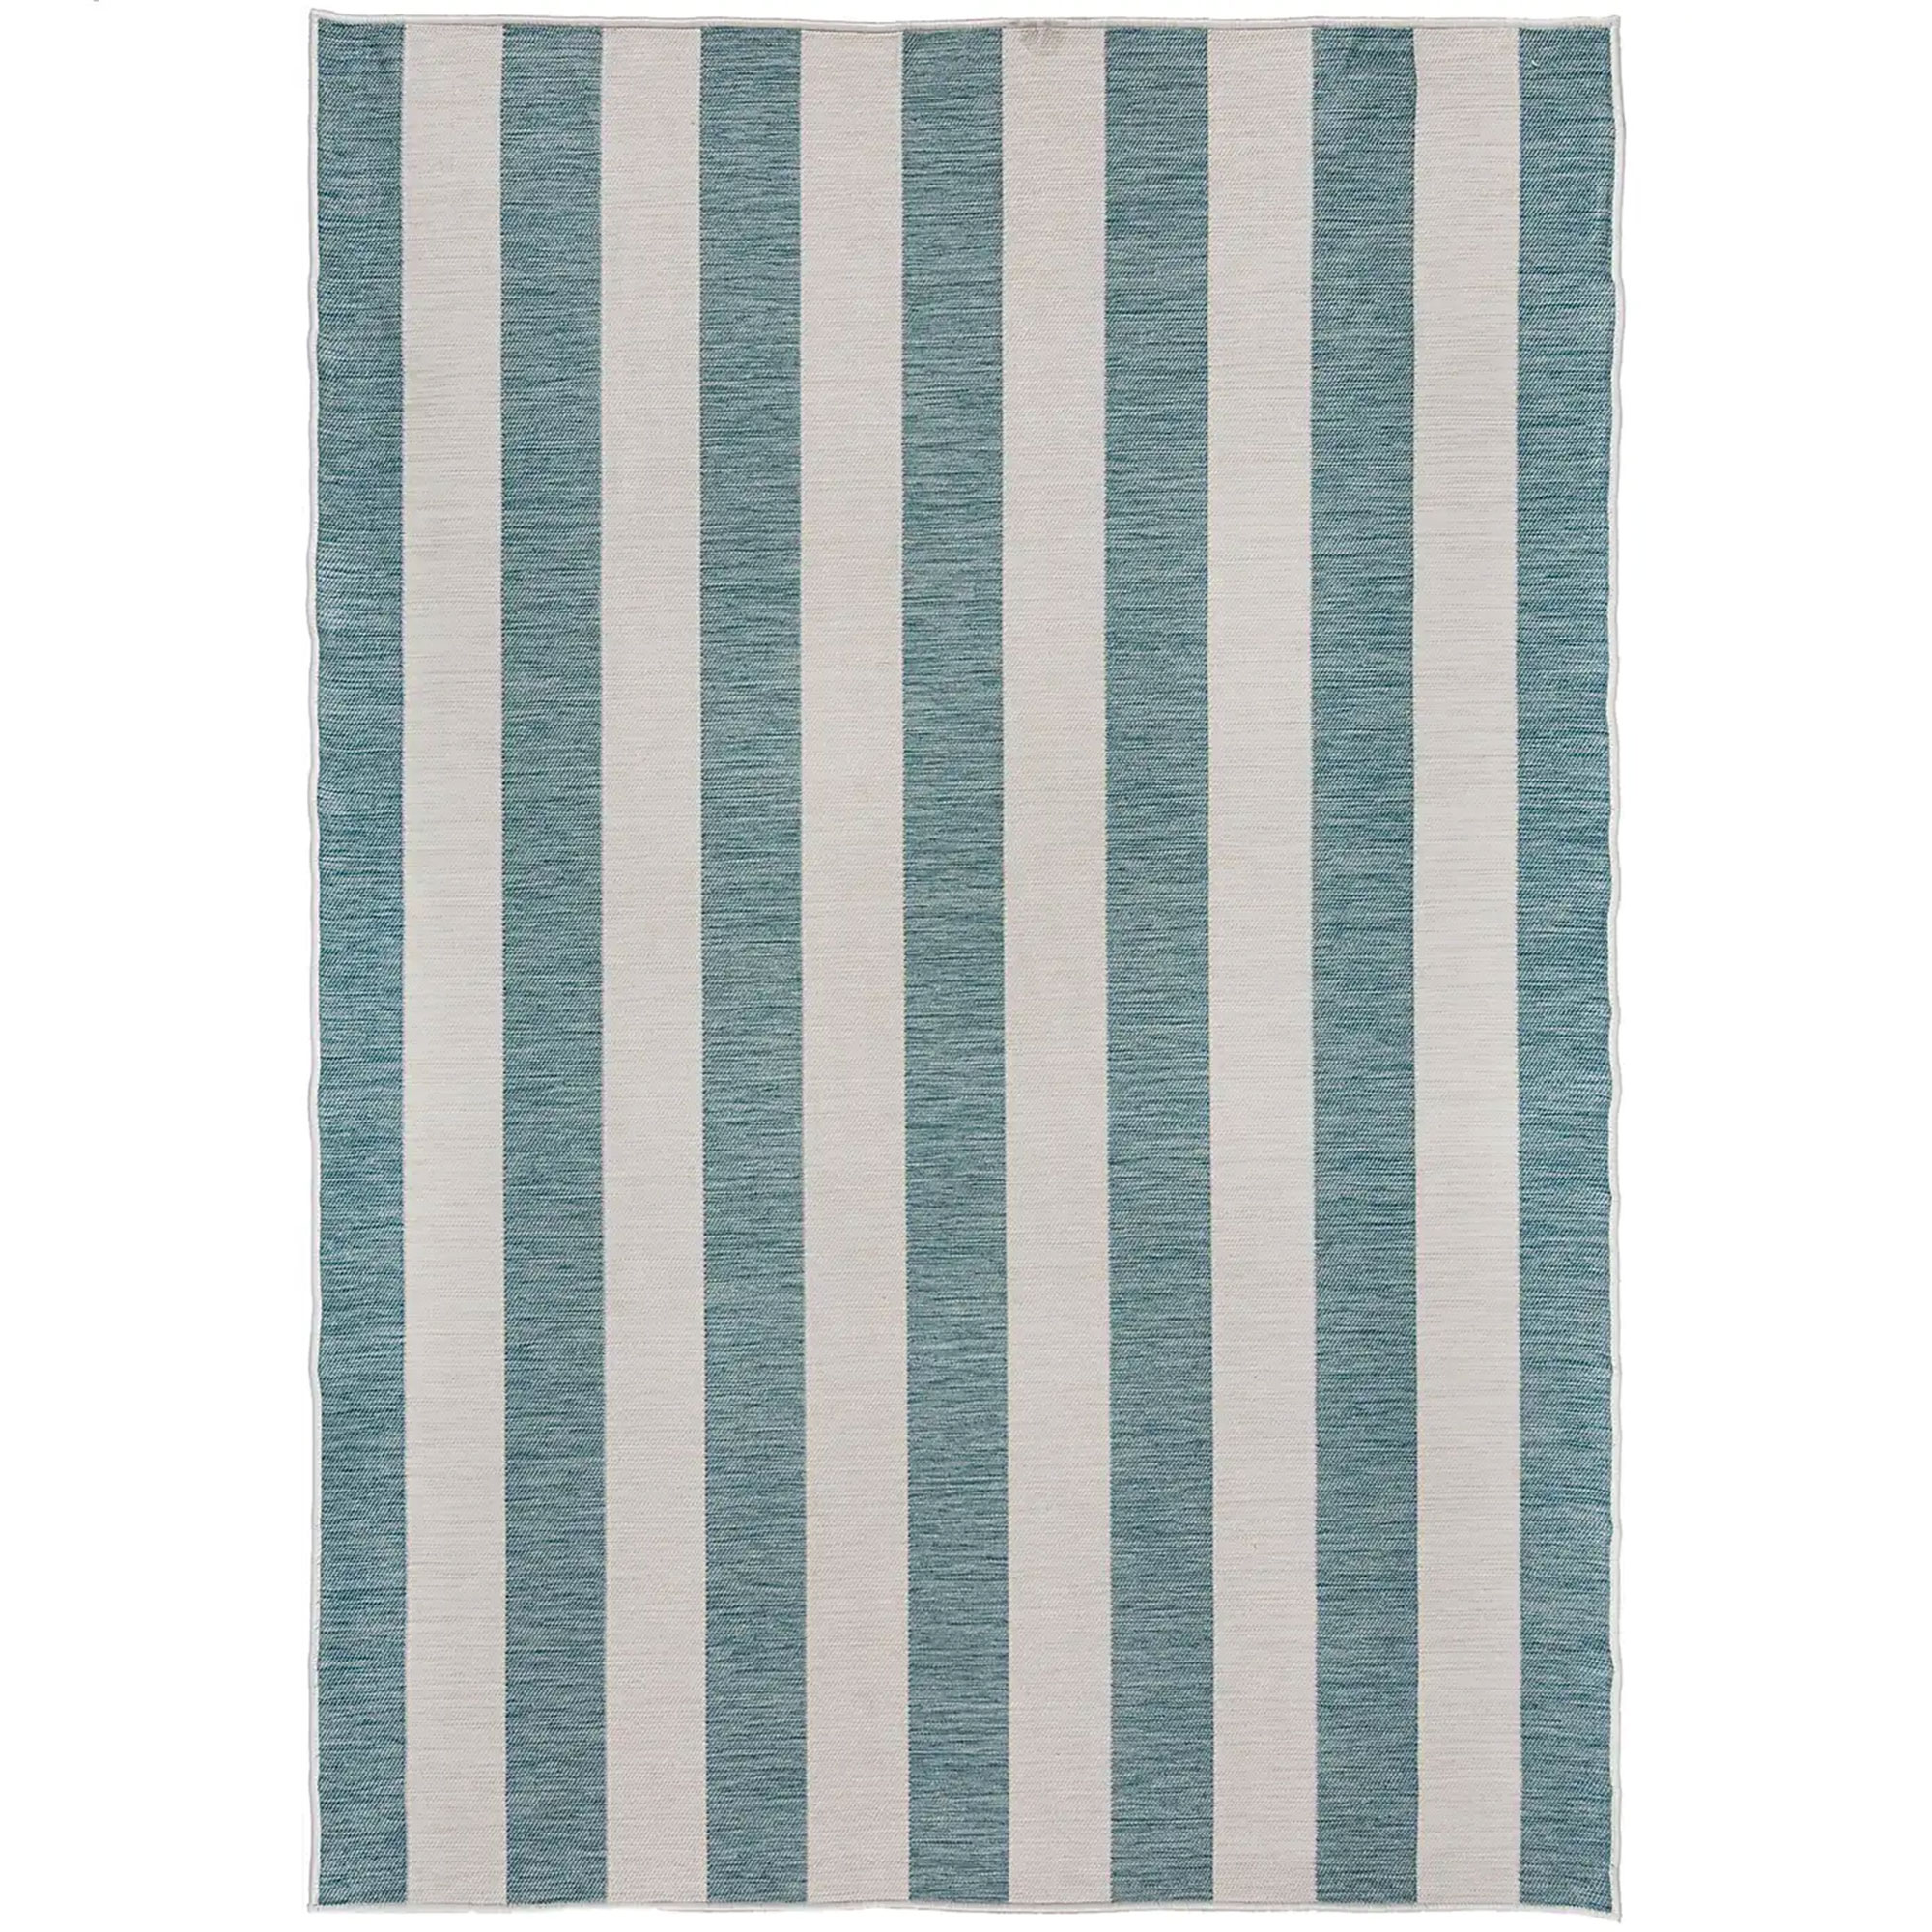 Blue and white stripe rug